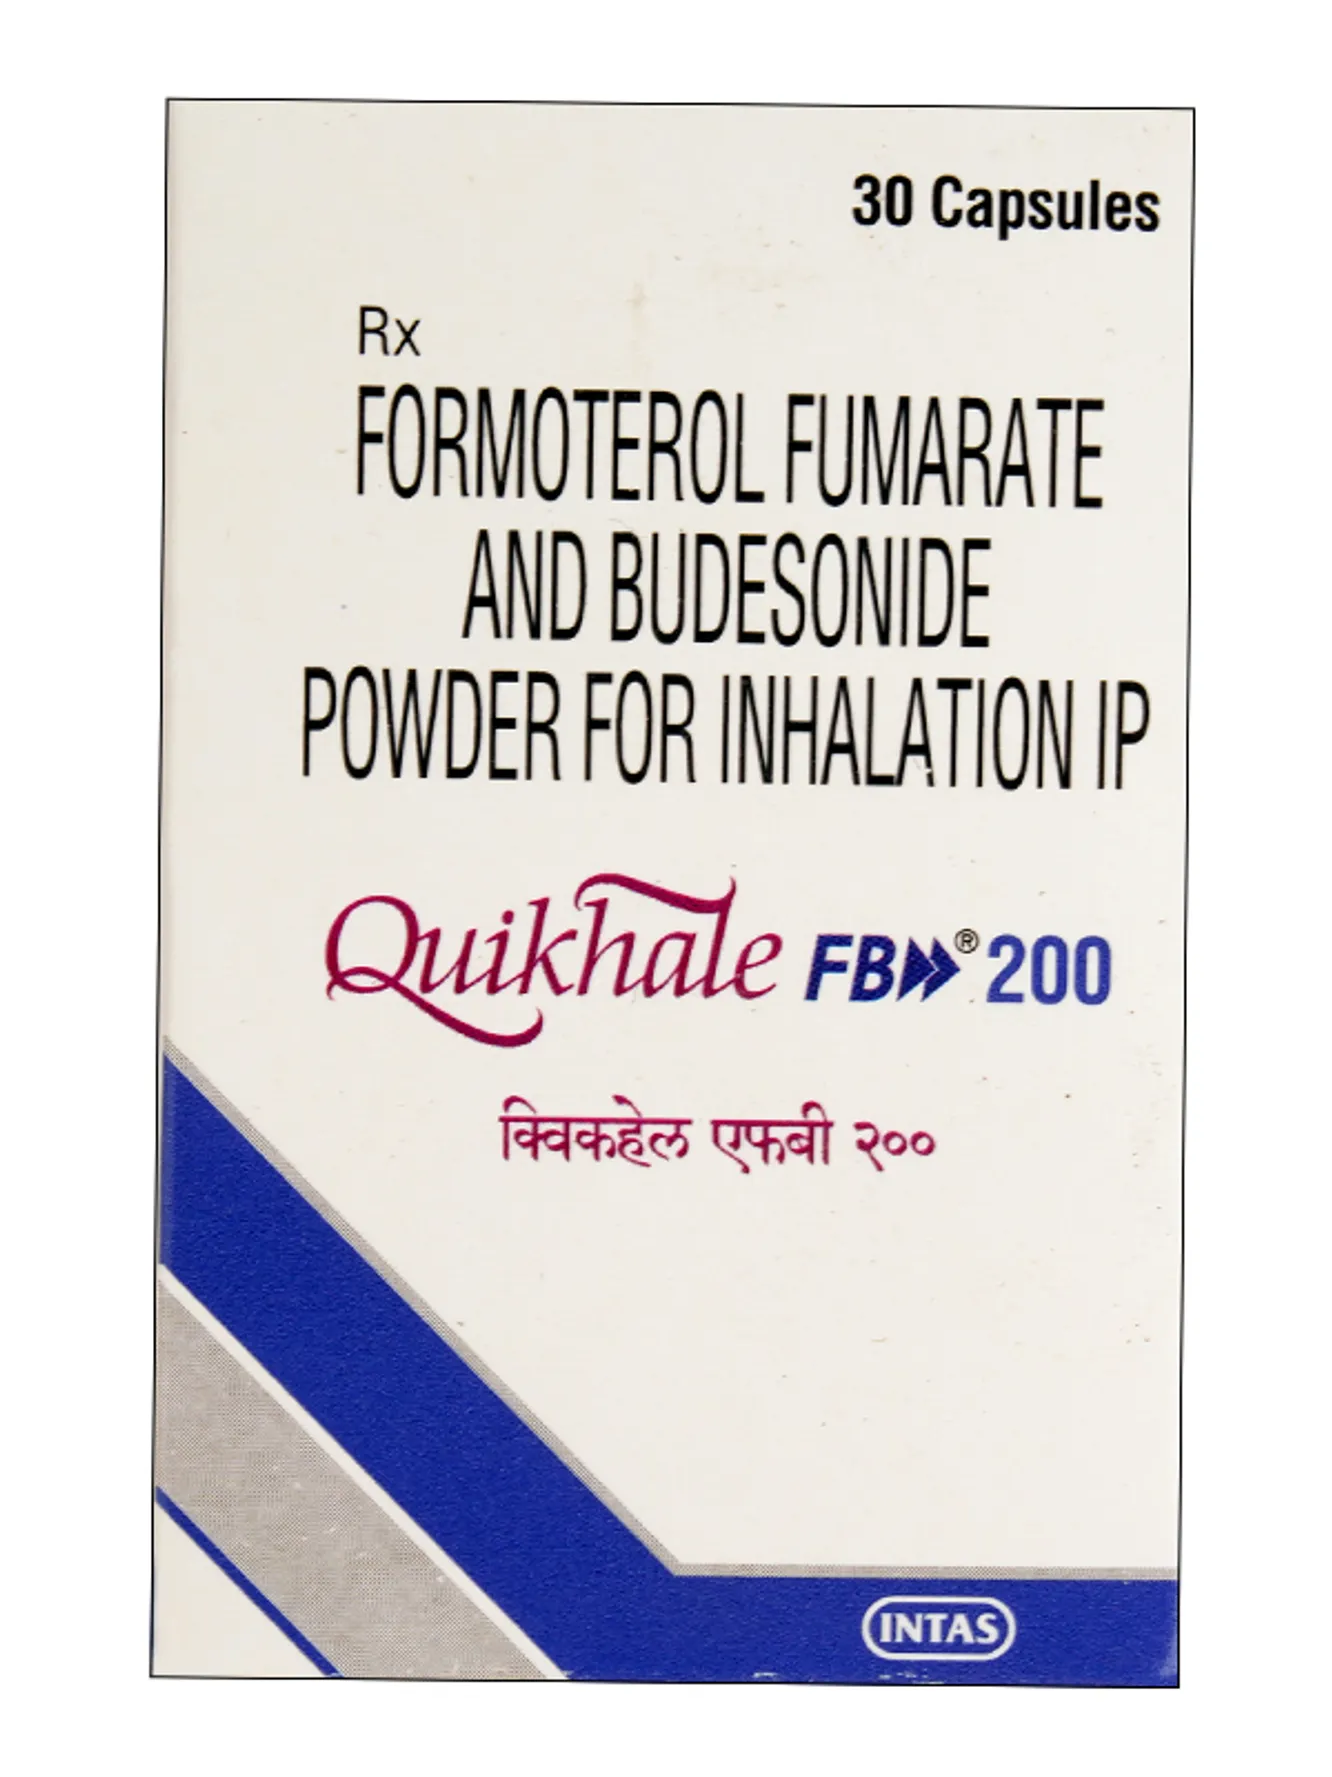 quikhale-fb-200-powder-for-inhalation